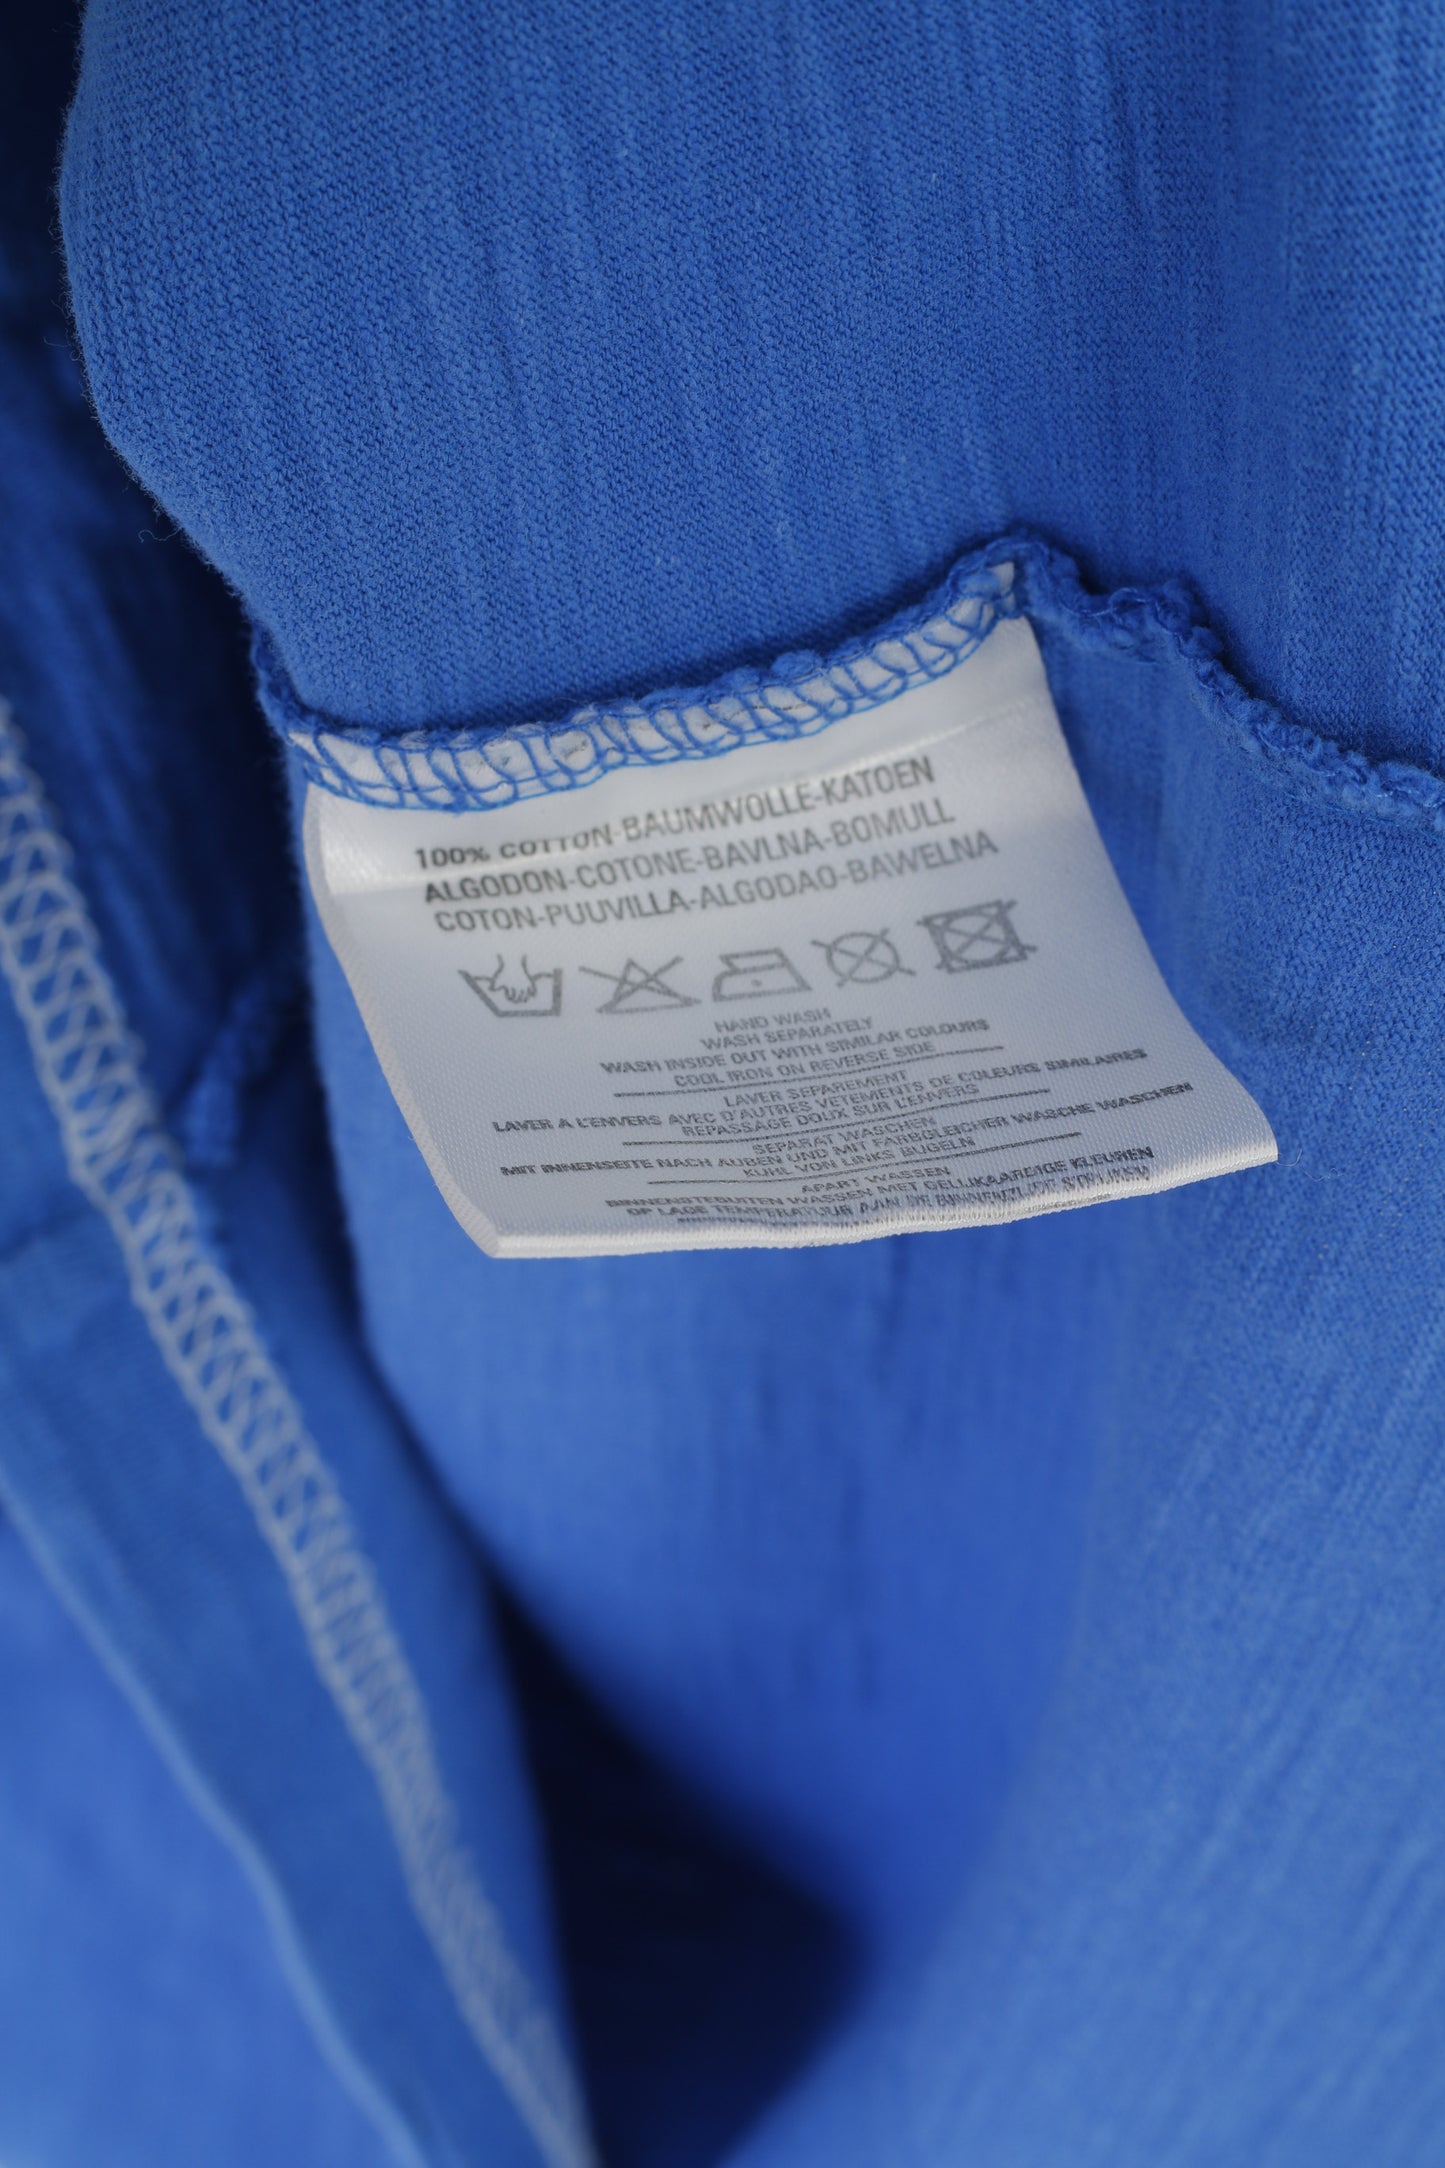 Nippon Osaka Series Men S Shirt Blue Baseball Graphic Cotton Emroidered Top